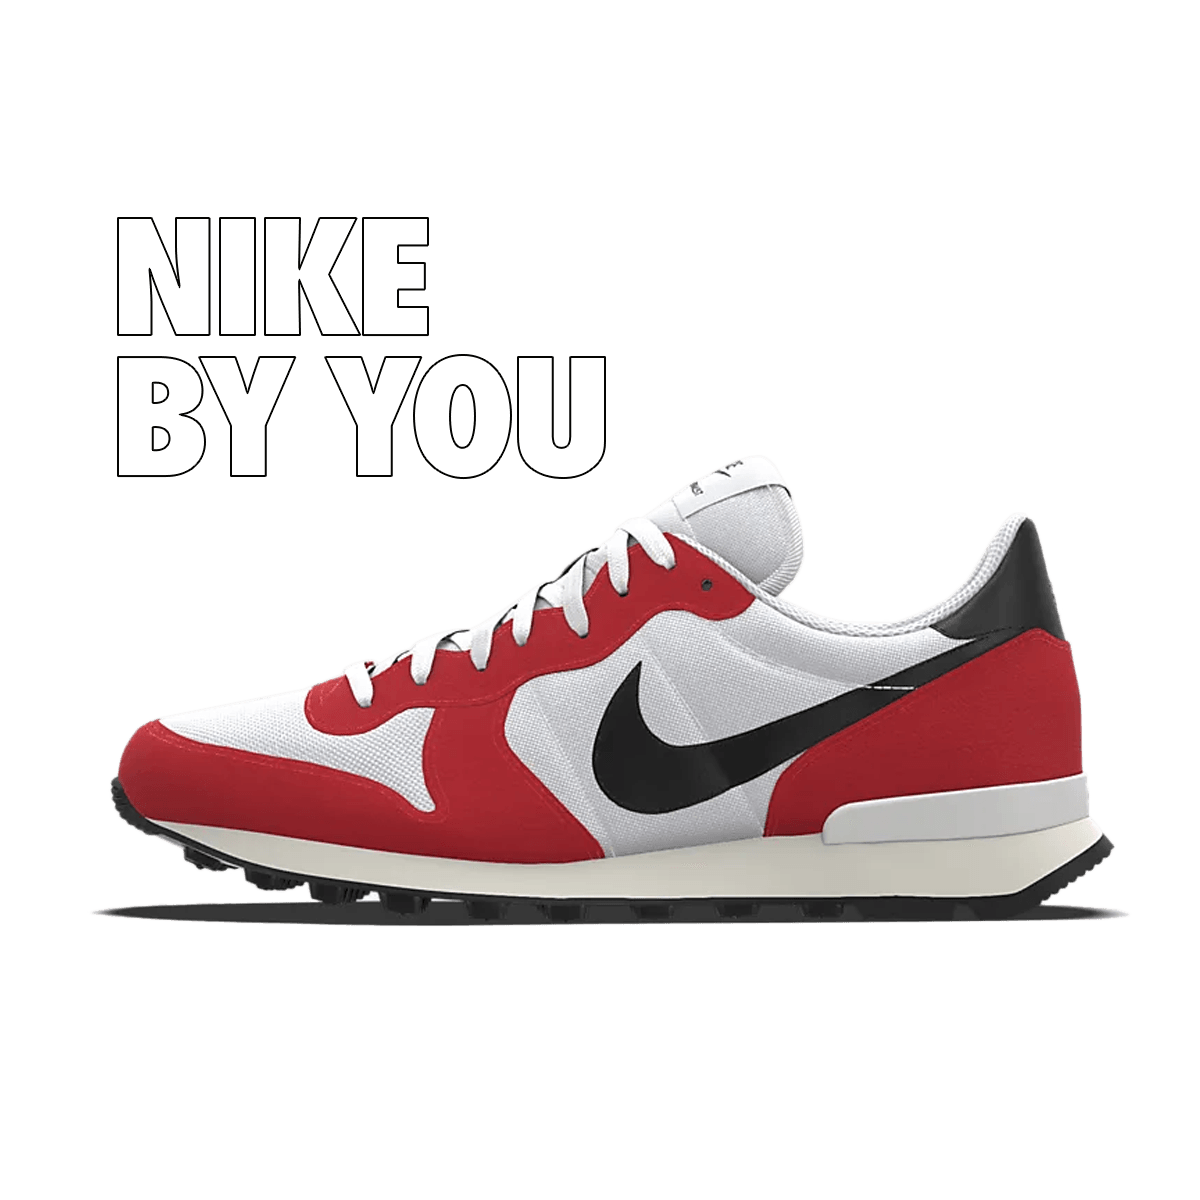 Nike Internationalist - By You CW7635-991